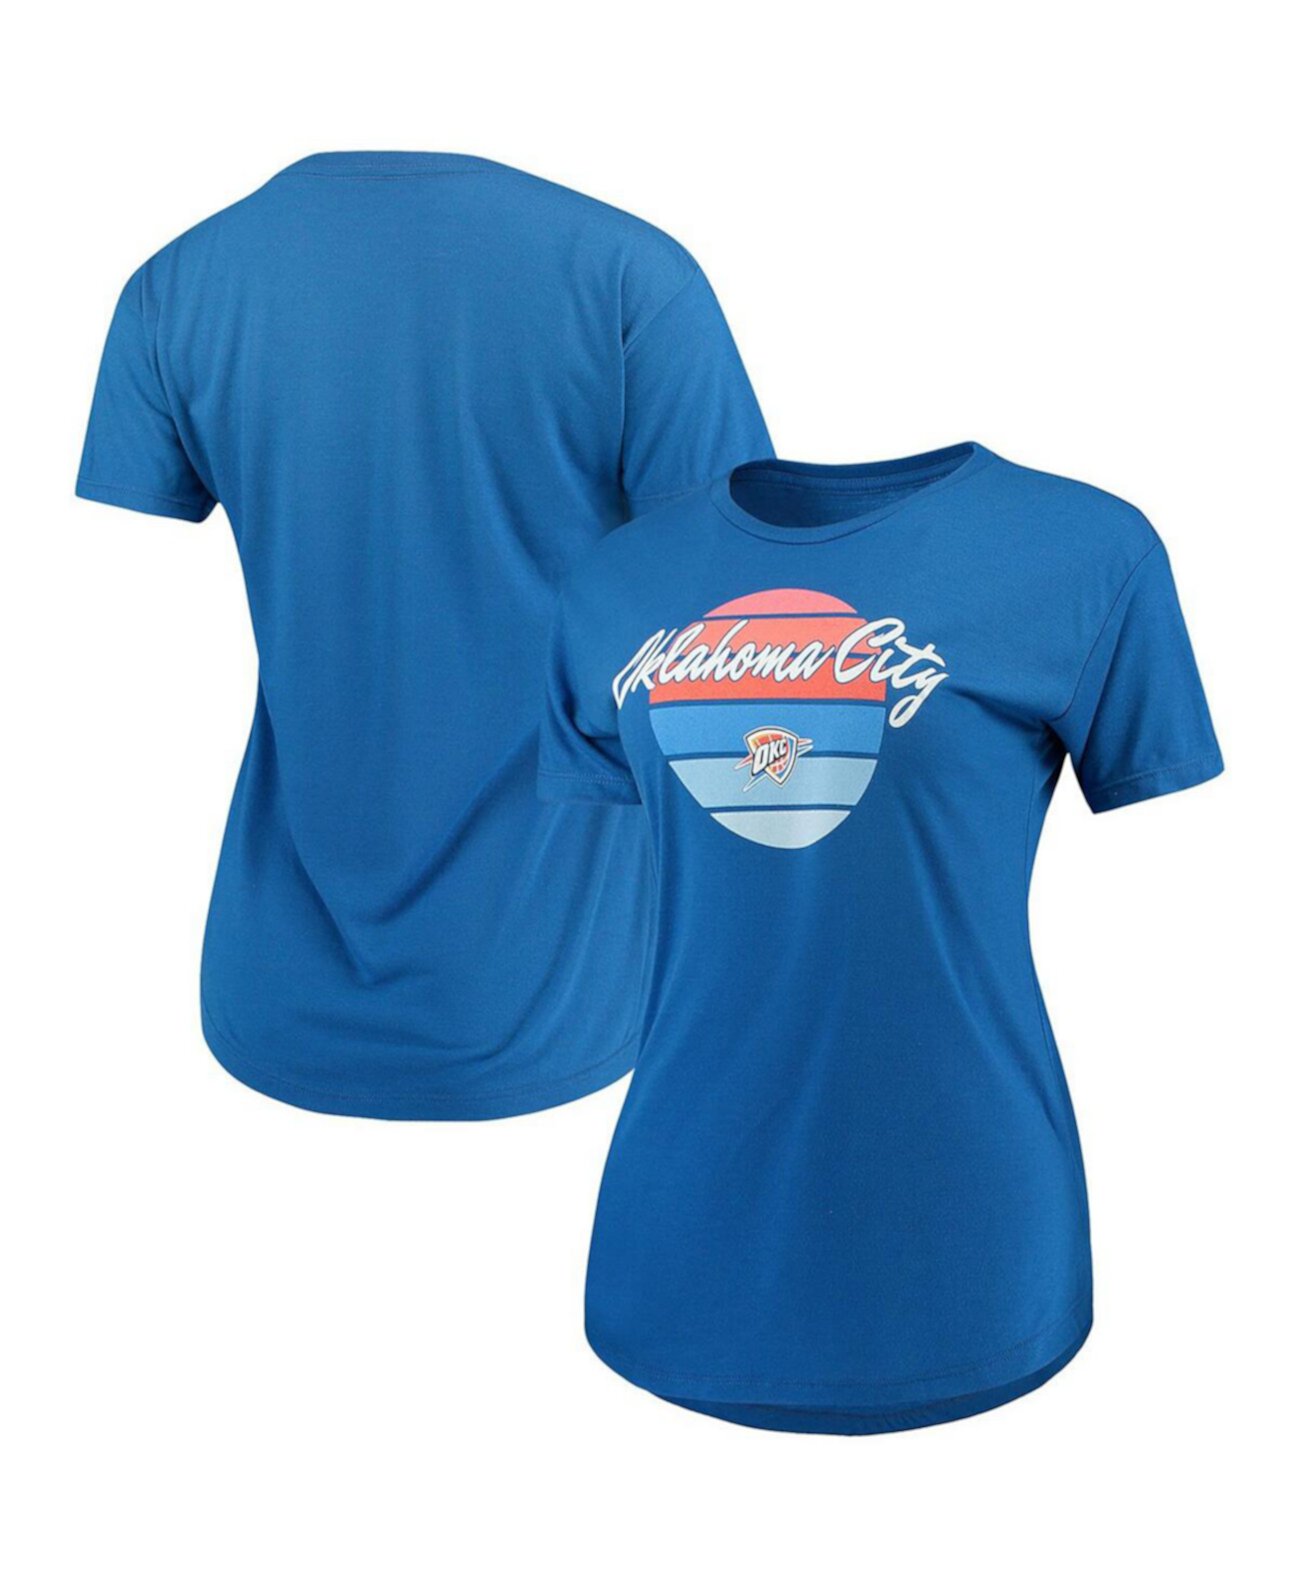 Женская синяя футболка Oklahoma City Thunder Phoebe Super Soft Tri-Blend Sportiqe